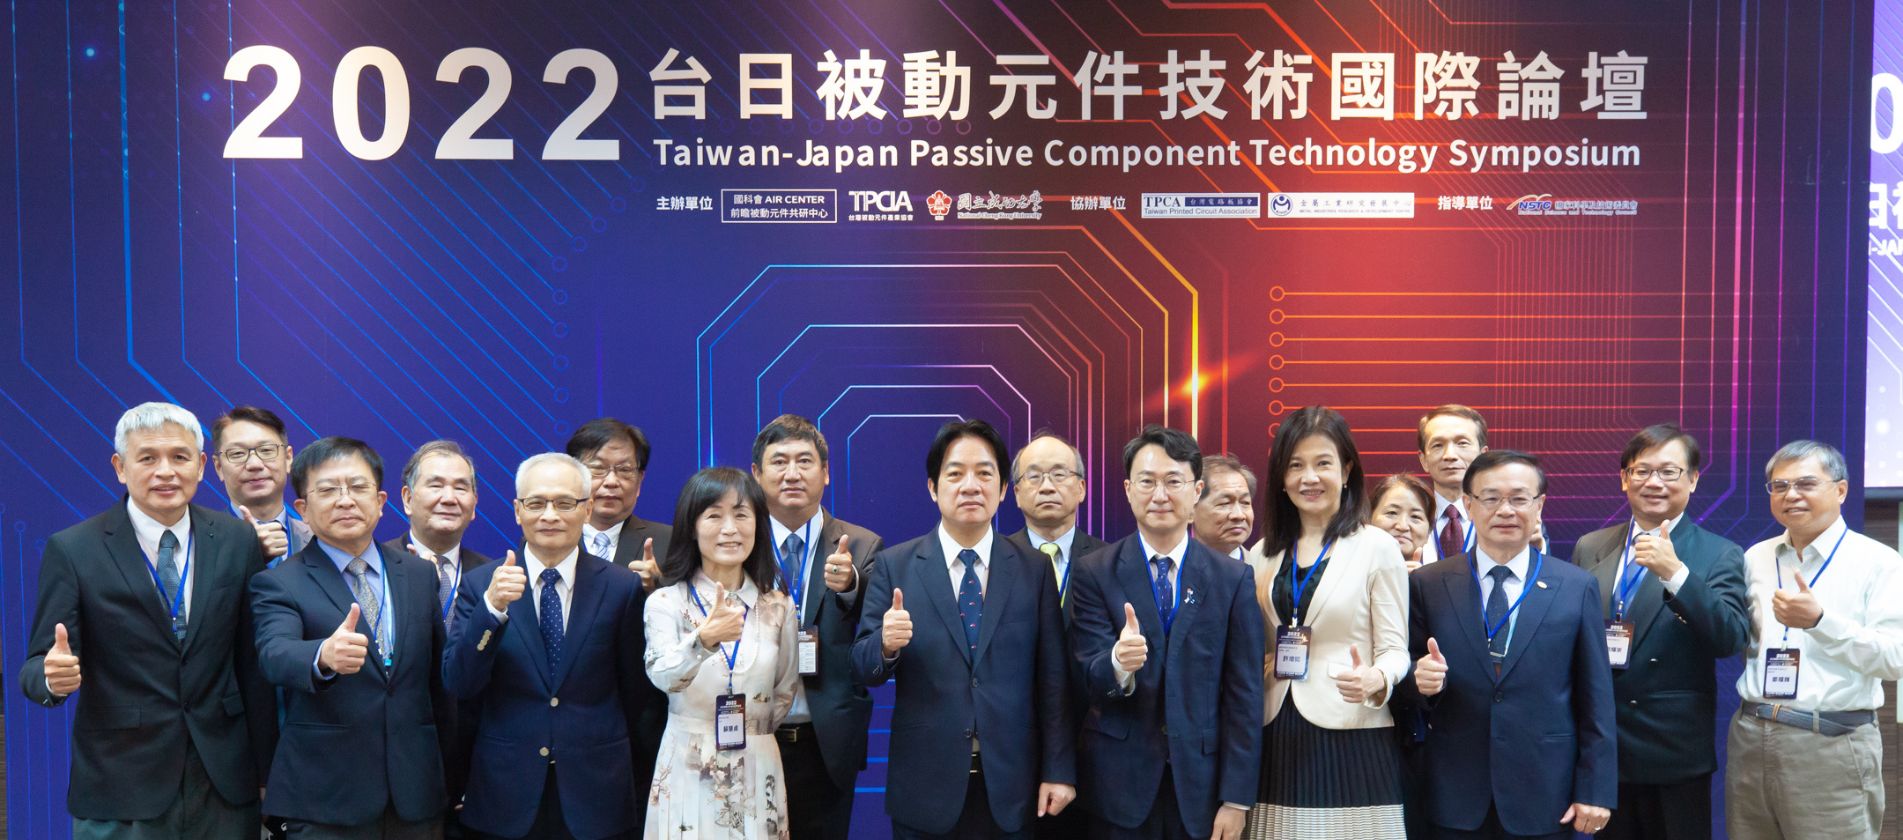 2022 Taiwan-Japan Passive Component Technology Symposium